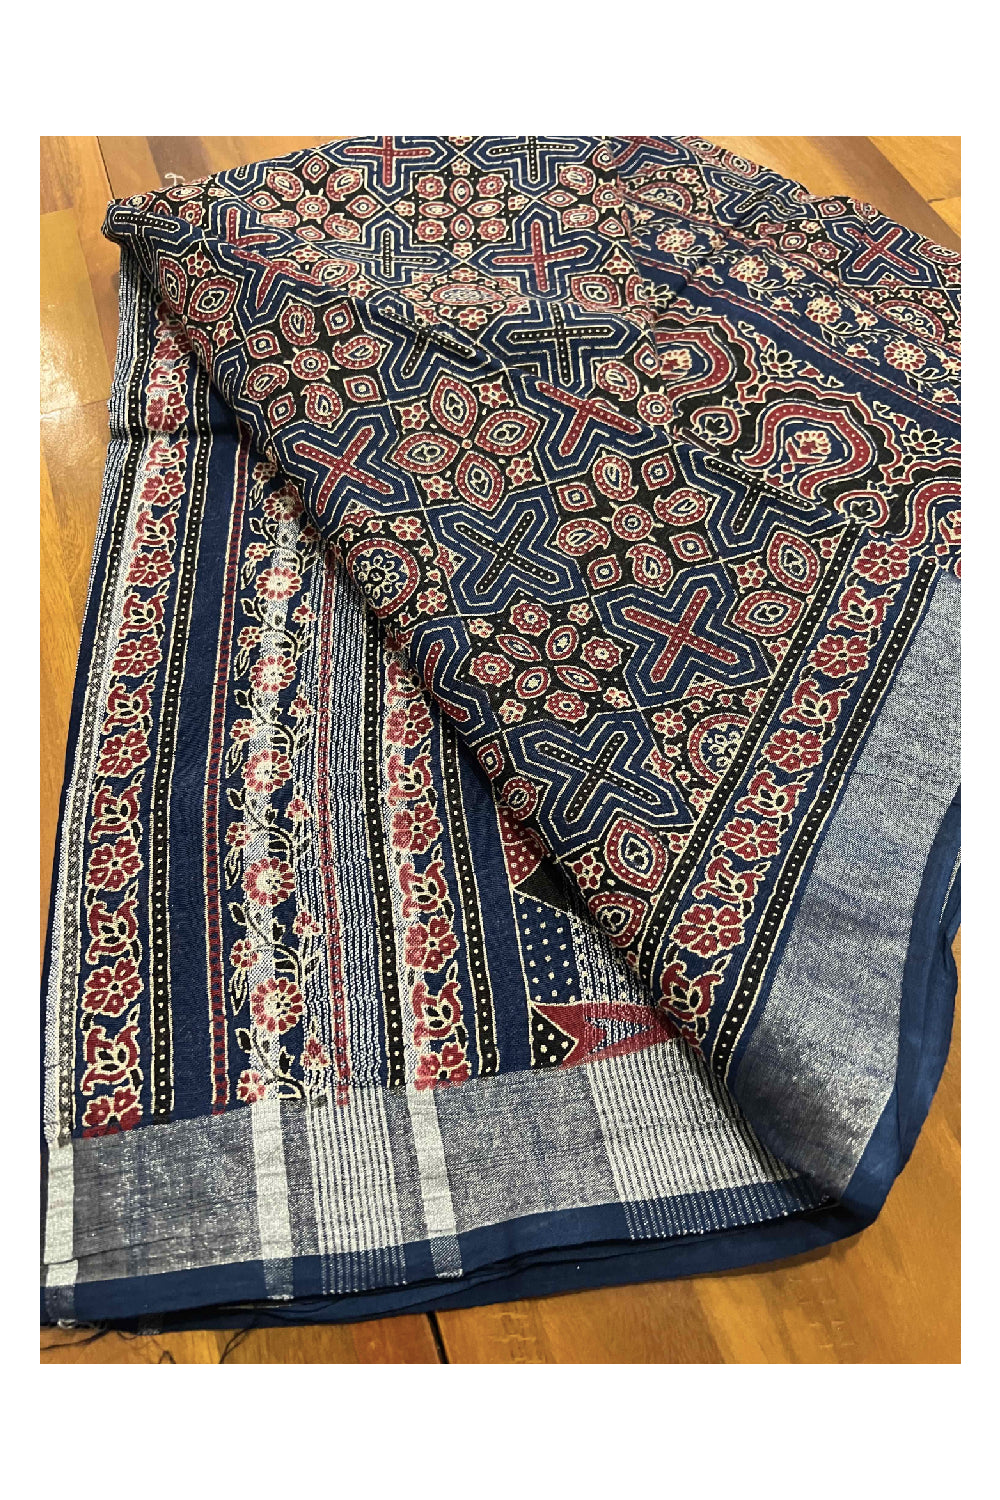 Southloom Linen Designer Saree with Ajrakh Prints on Dark Blue Body and Tassels on Pallu